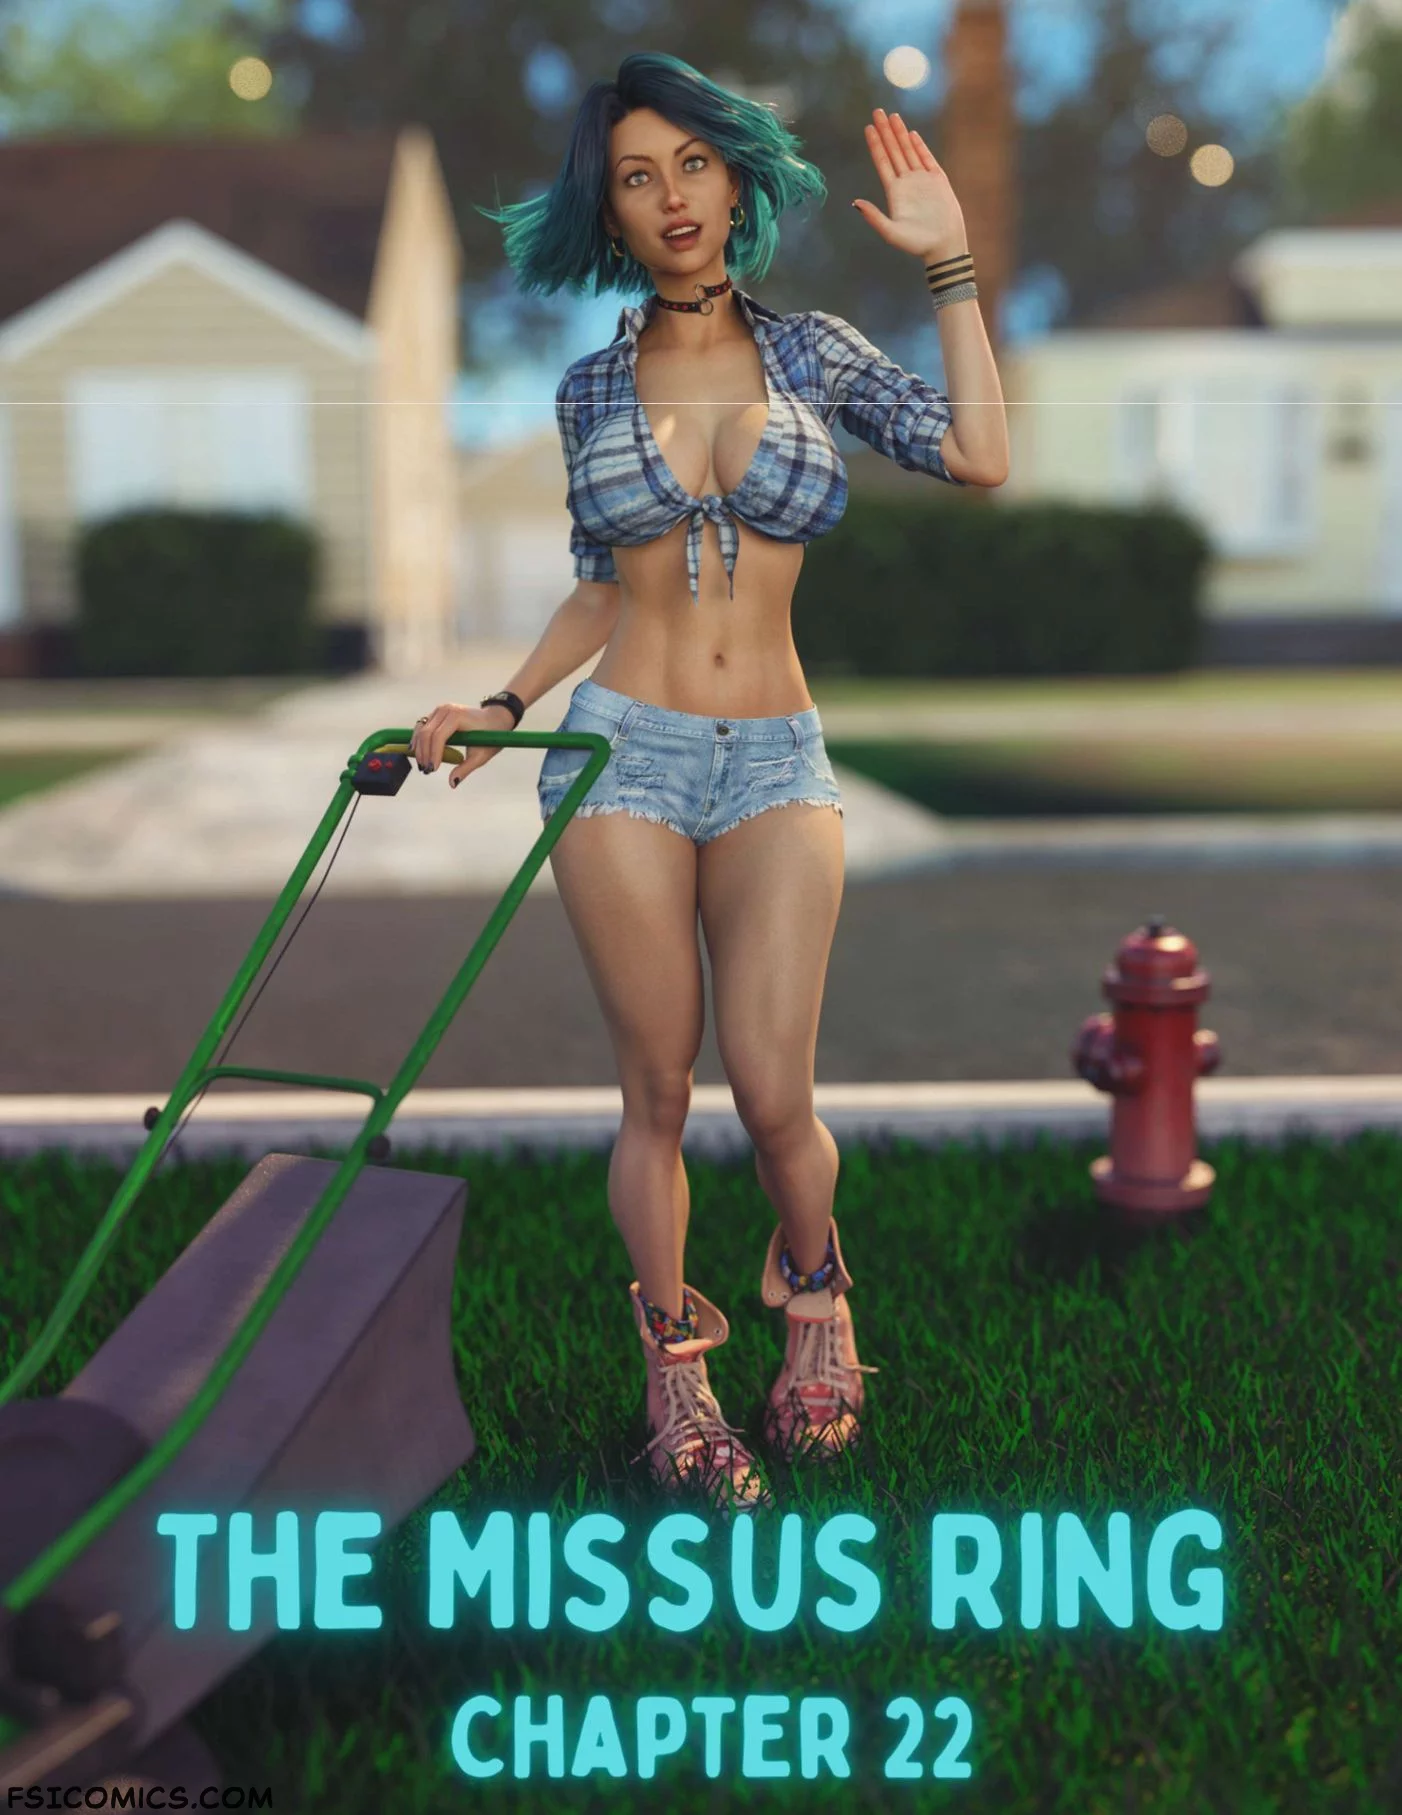 The Missus Ring Chapter 22 - Lexx228 | RawlyRawls - 135 - FSIComics